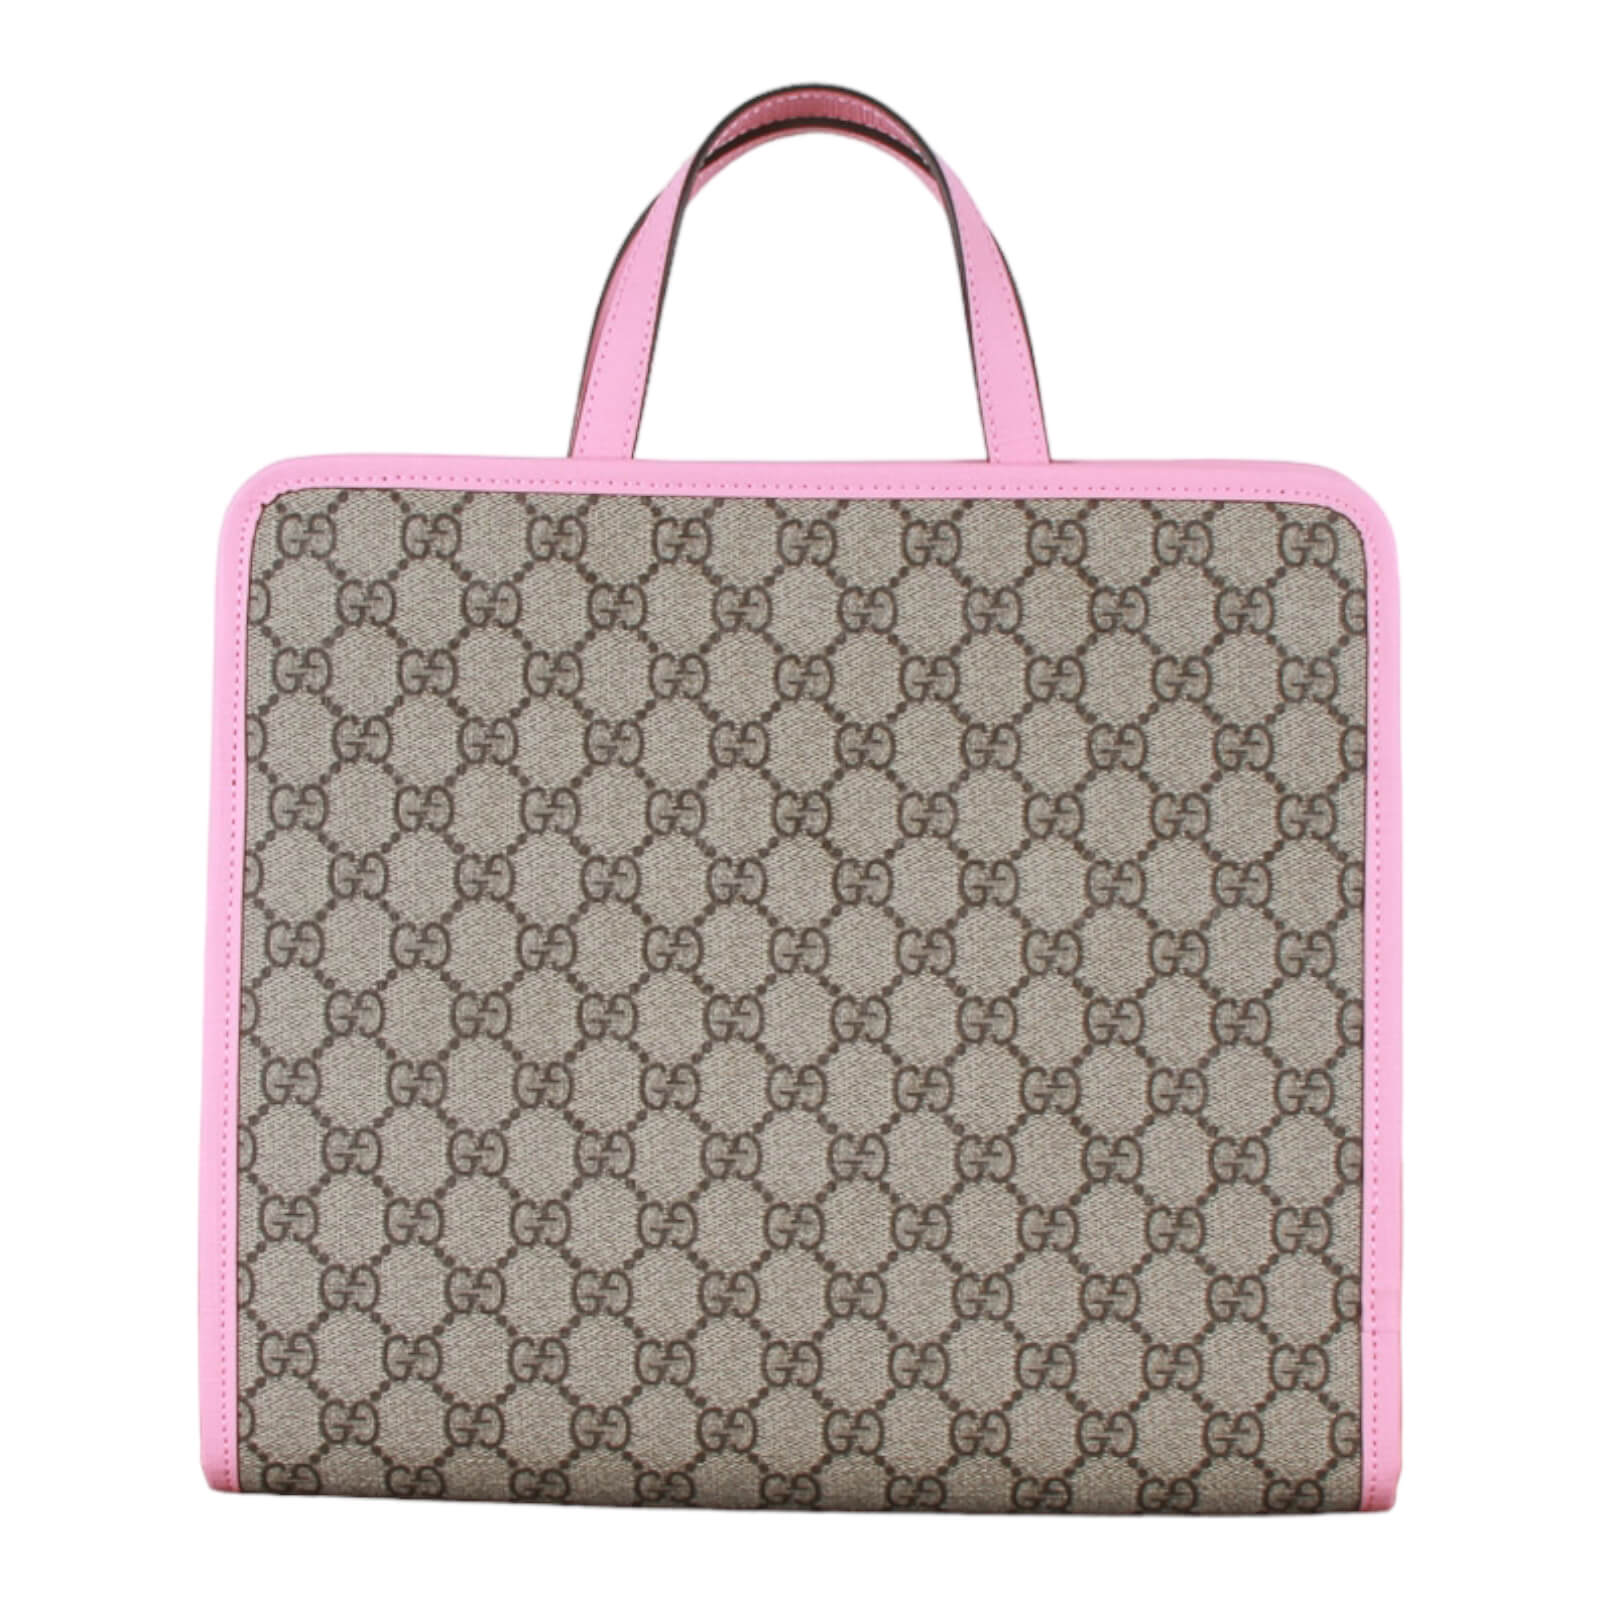 Gucci GG Supreme Tote Bags for Women, Authenticity Guaranteed